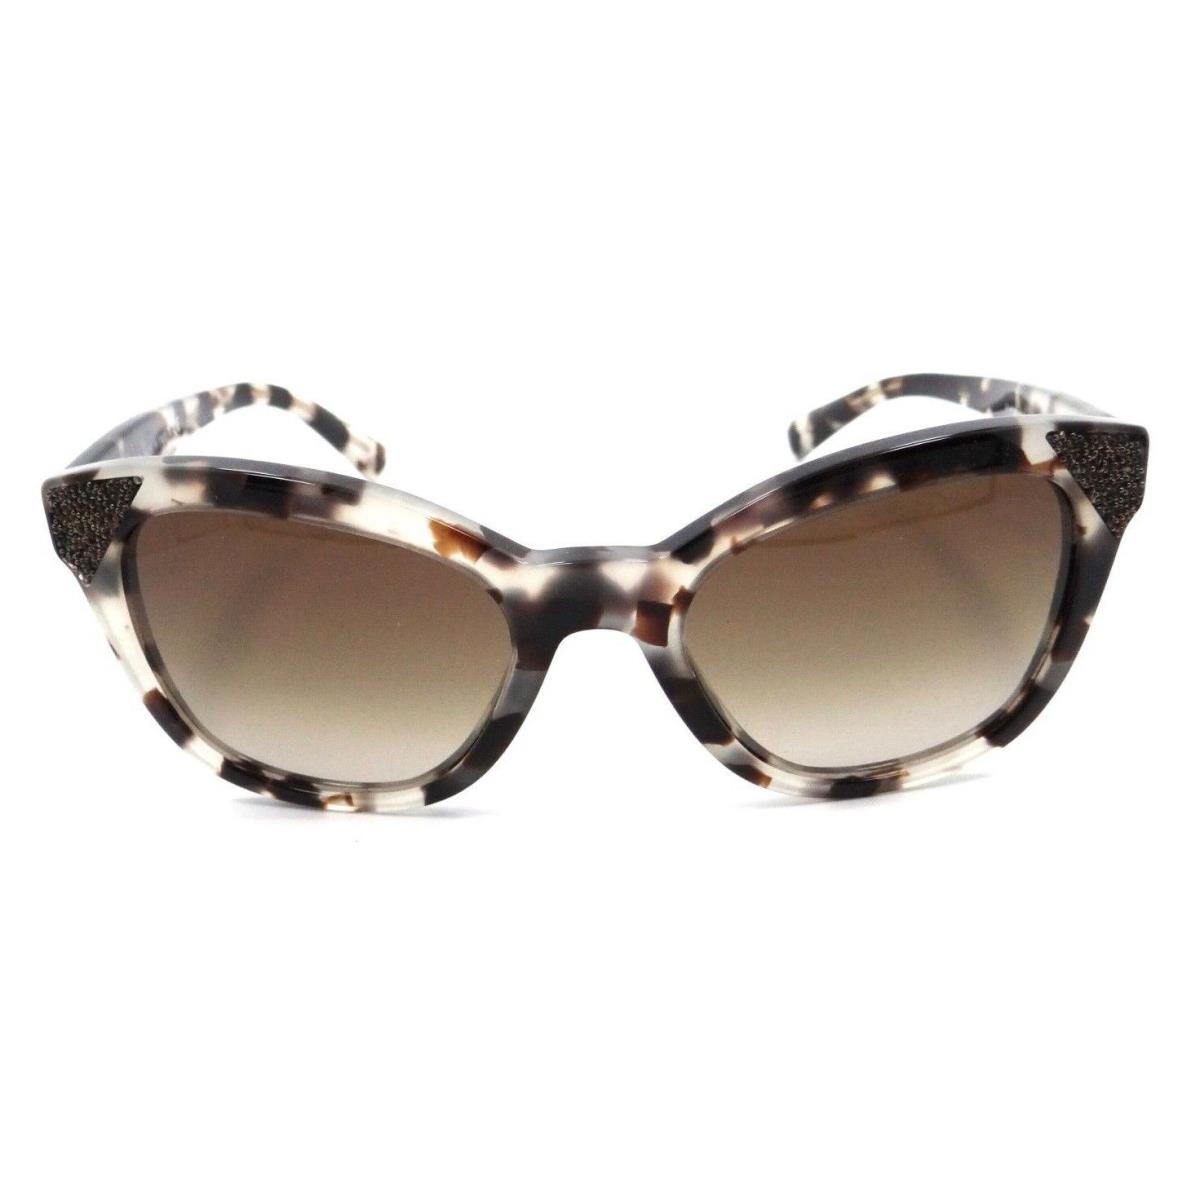 Valentino Sunglasses VA 4005 5097/13 52-20-140 Beige Havana / Brown Gradient